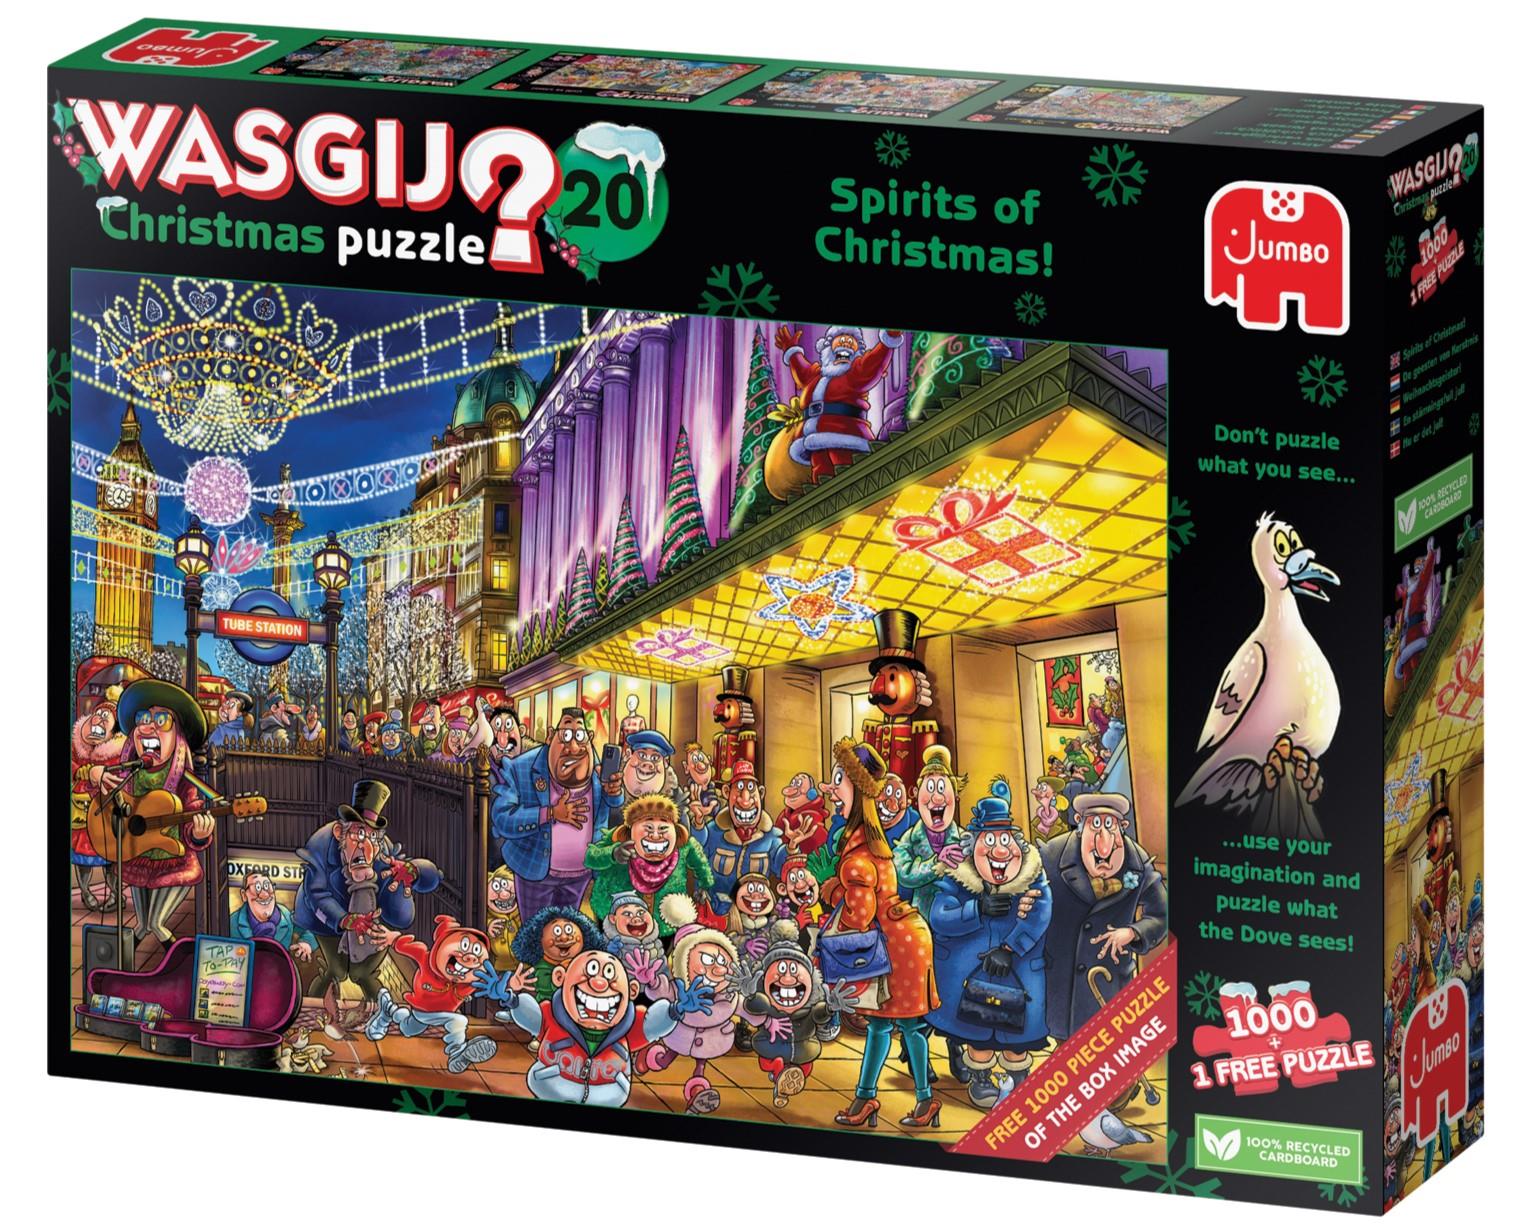 Wasgij Christmas 20 Spirit of Christmas 1000 Piece Jigsaw Puzzle